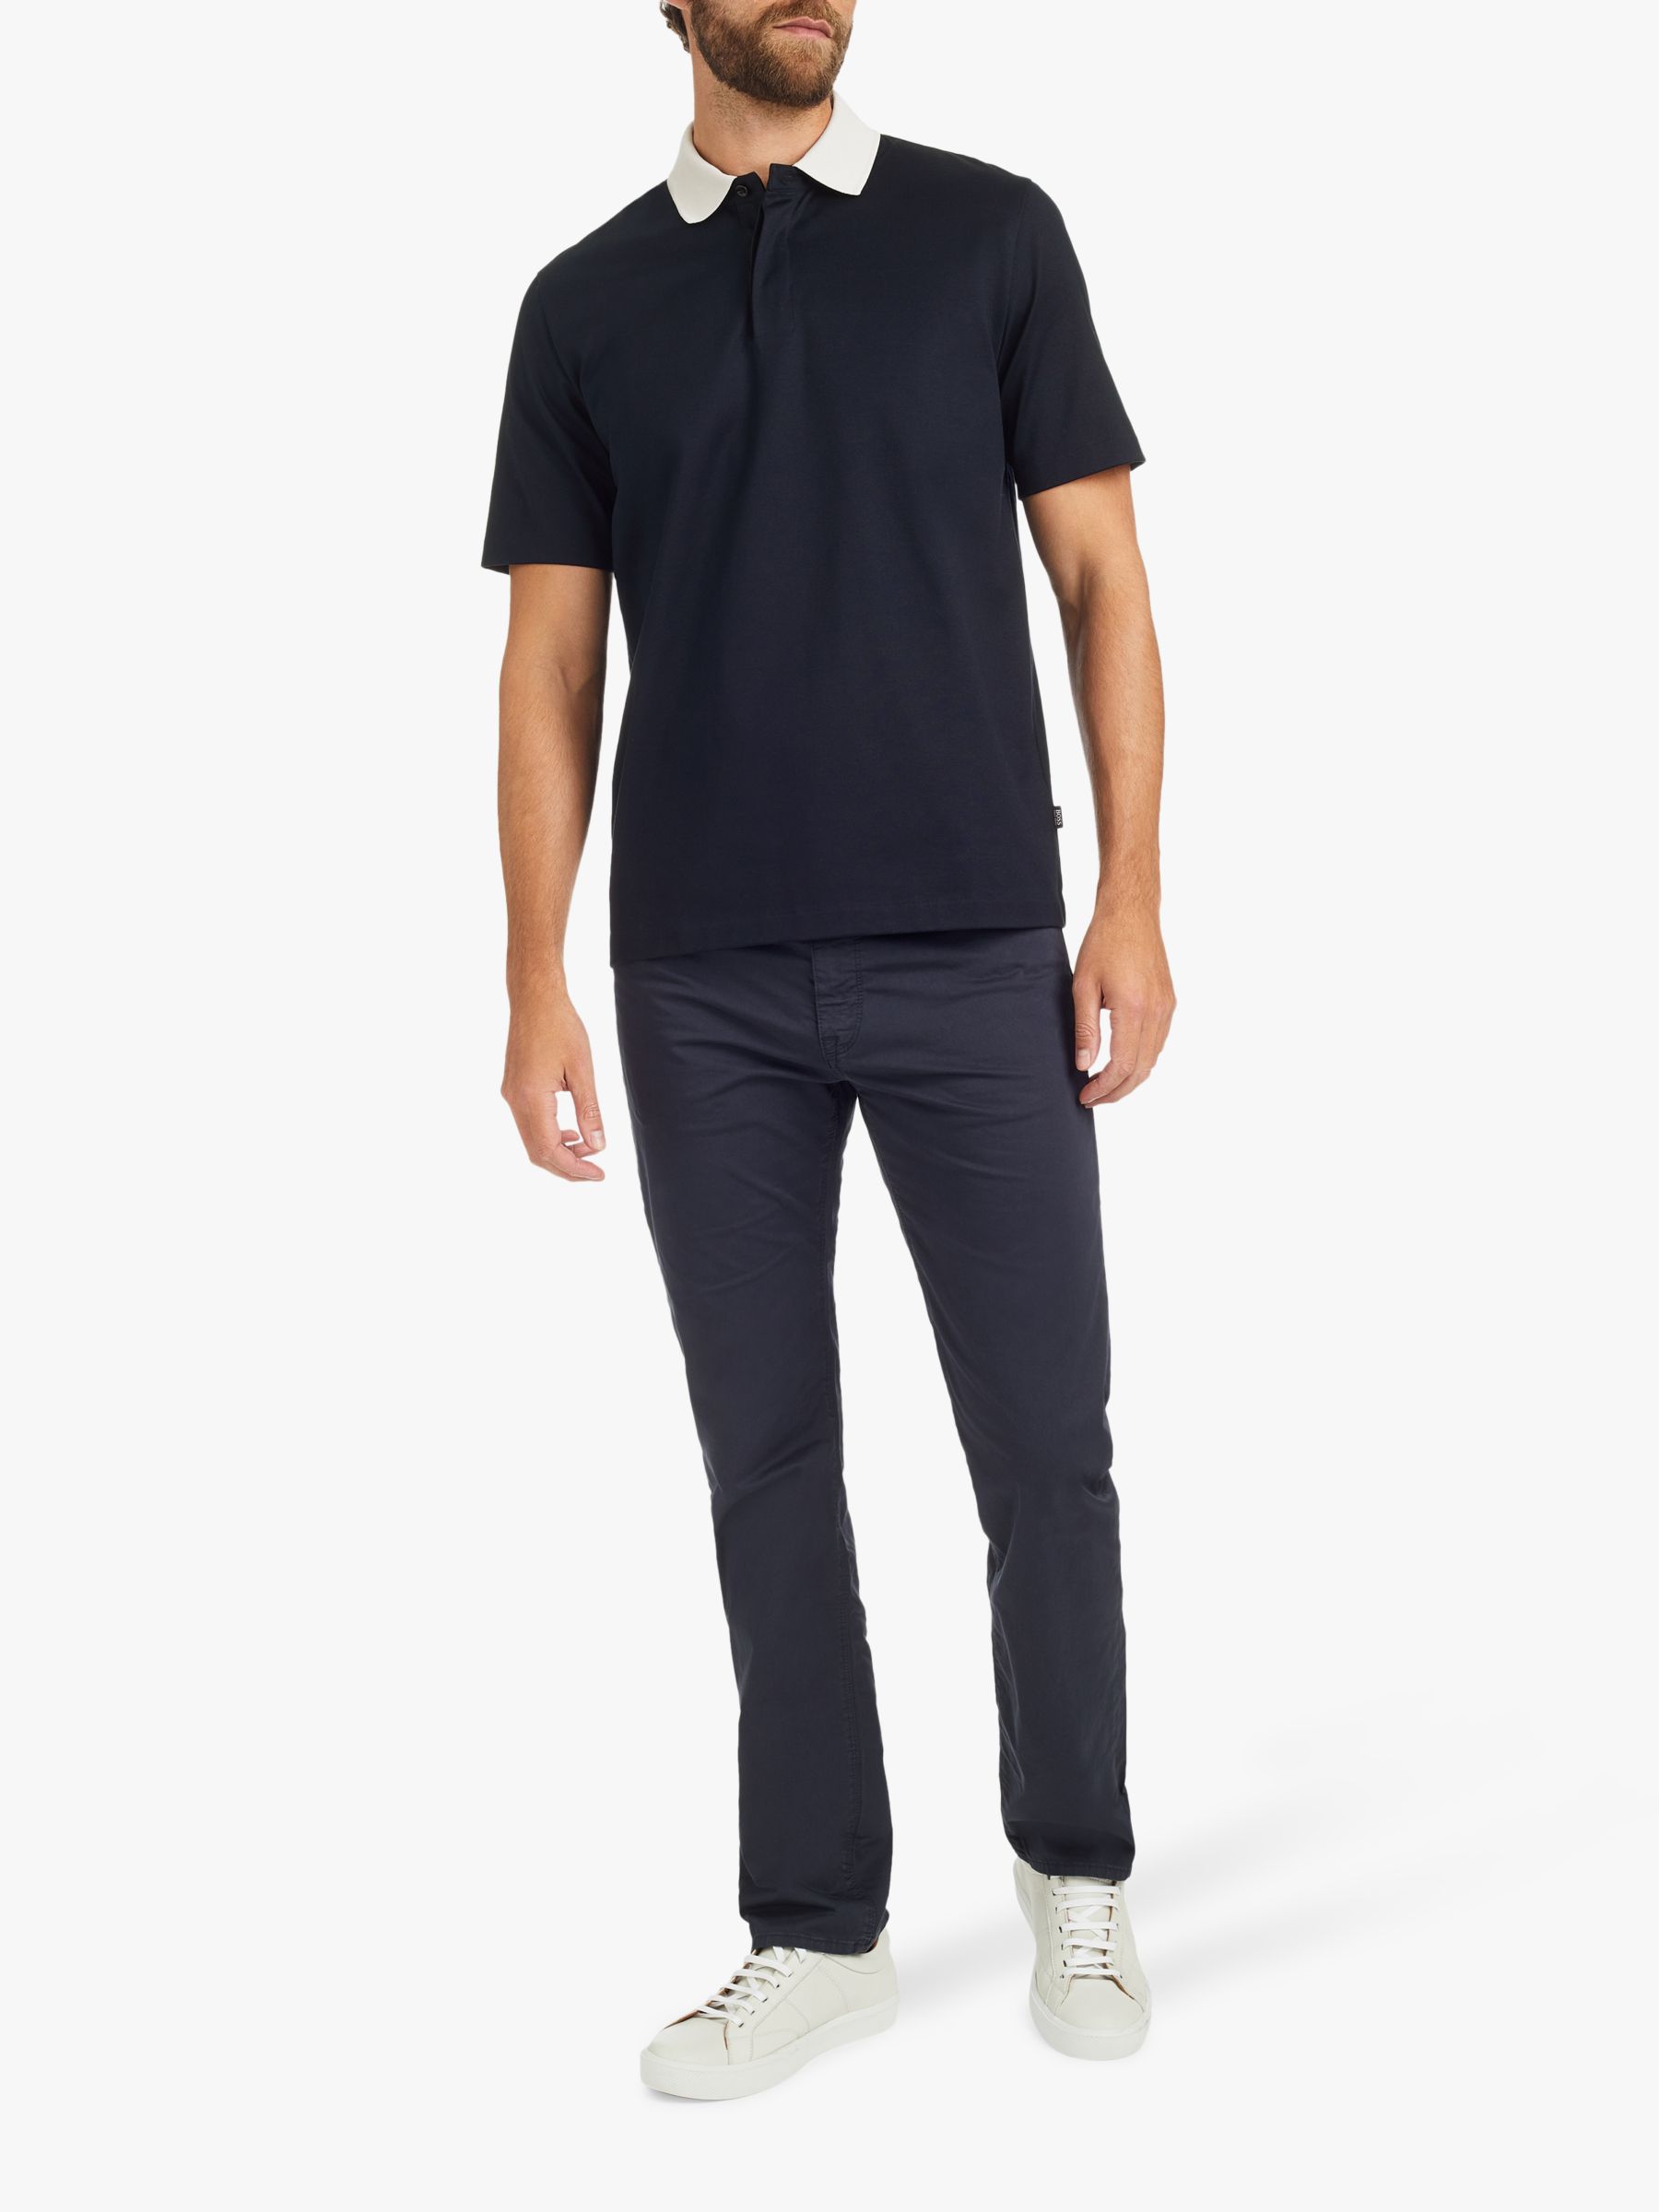 BOSS Pack Slim Fit Polo Shirt, Dark Blue